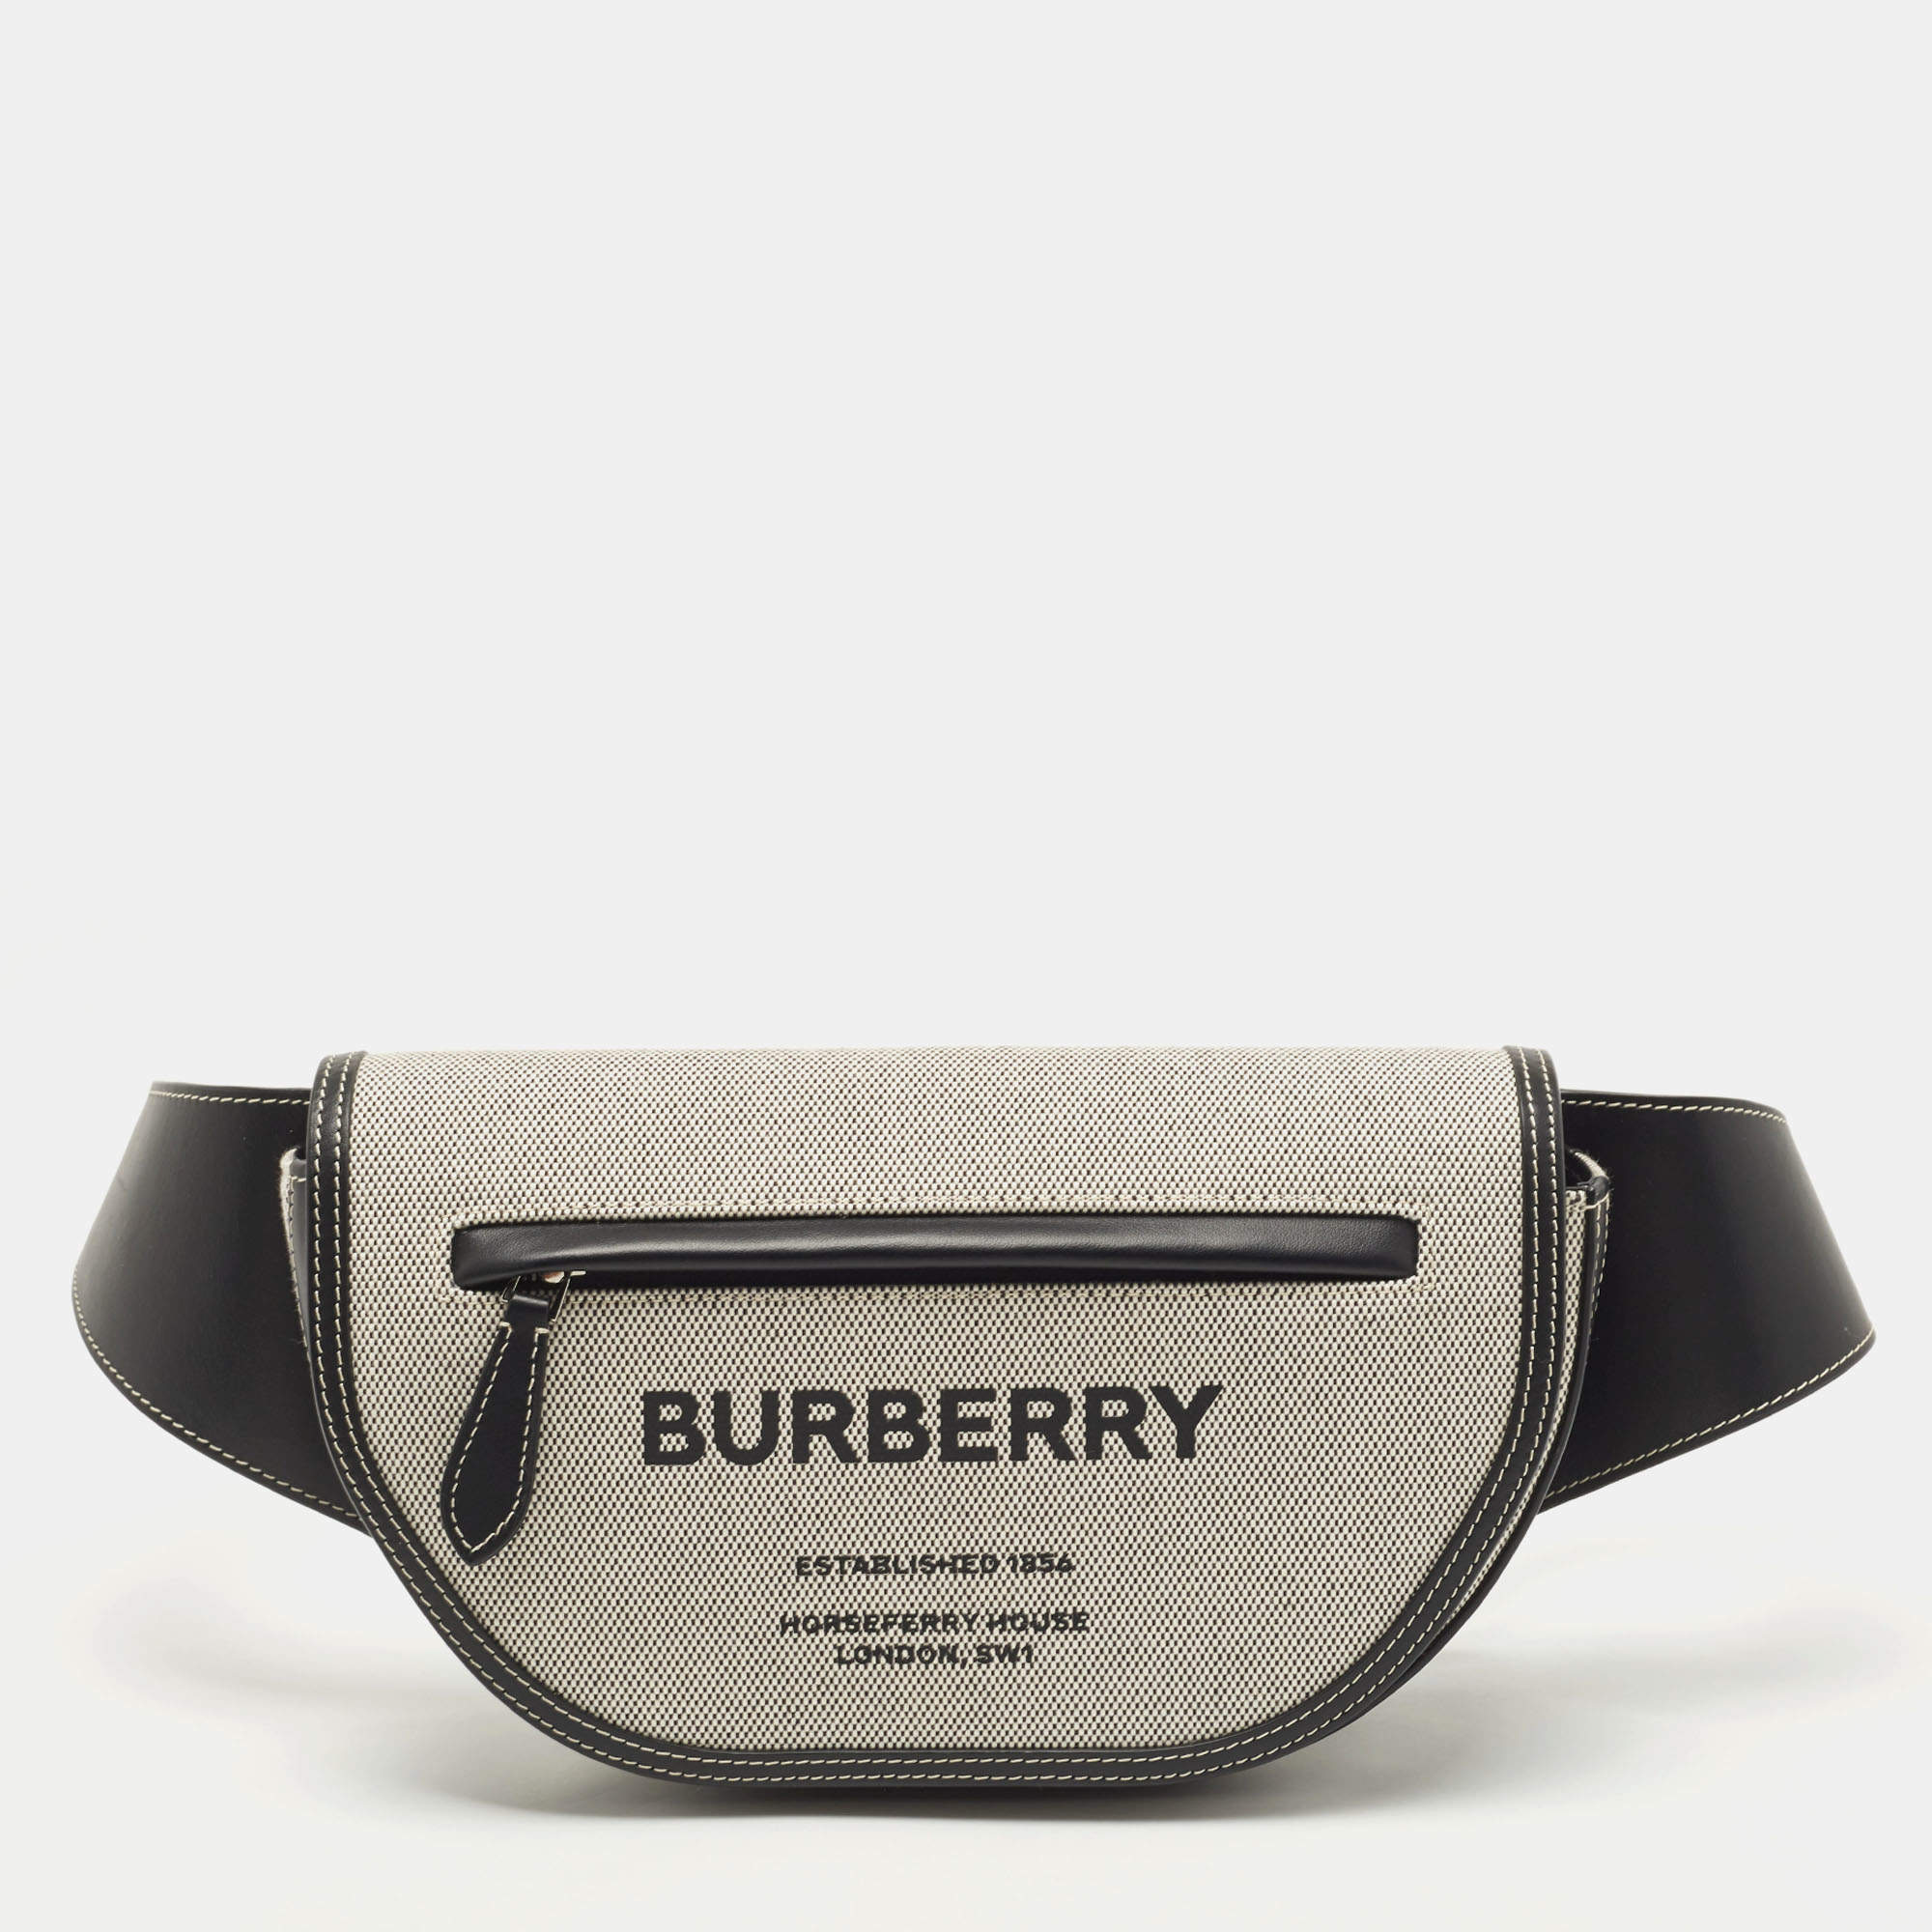 Burberry bags for men